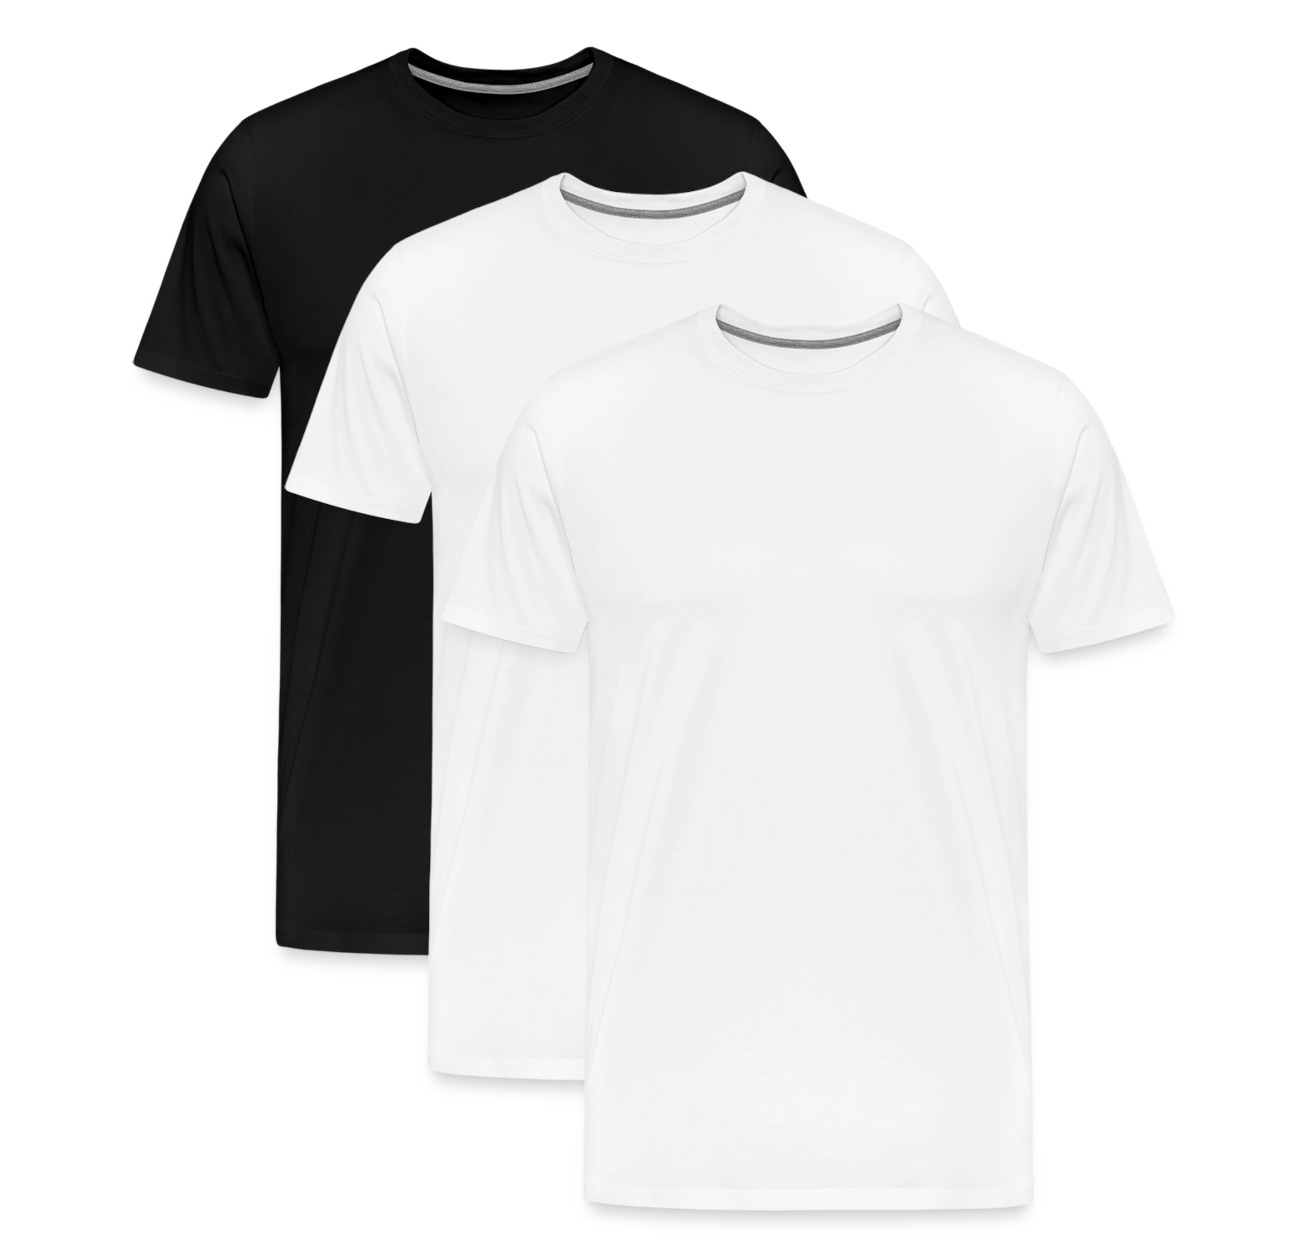 Fluent Tee Variety 3-Pack (Size XL) - Men's Premium T-Shirt from fluentclothing.com